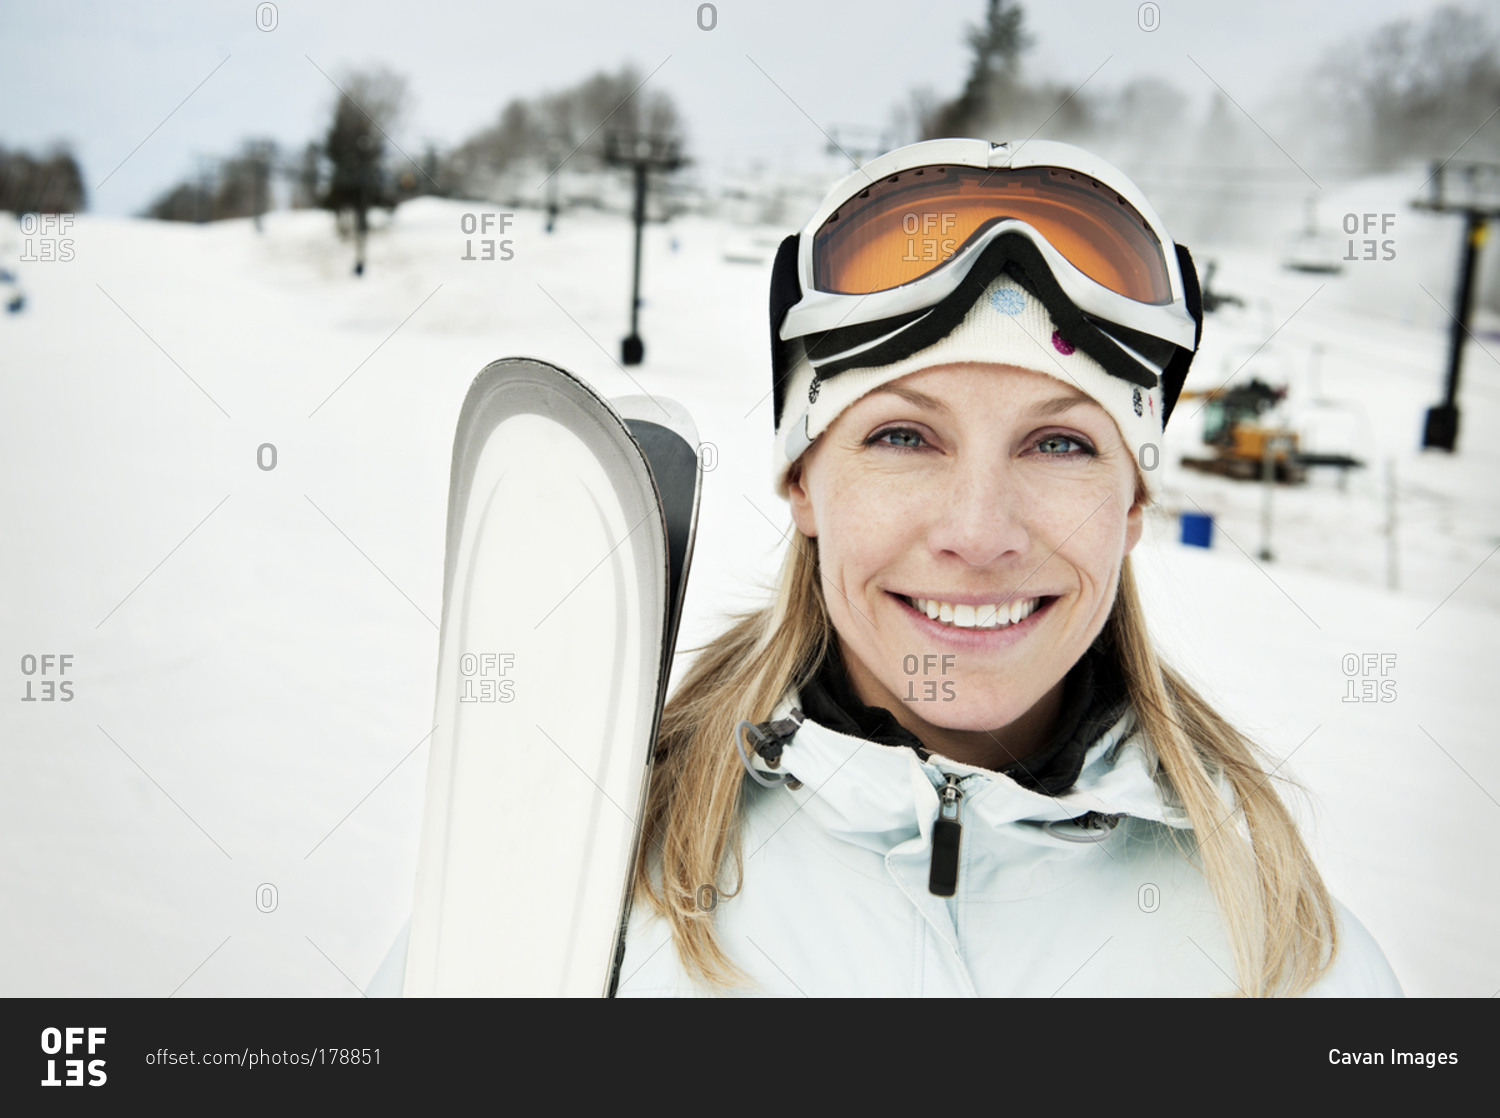 Portrait of a woman on a ski slope